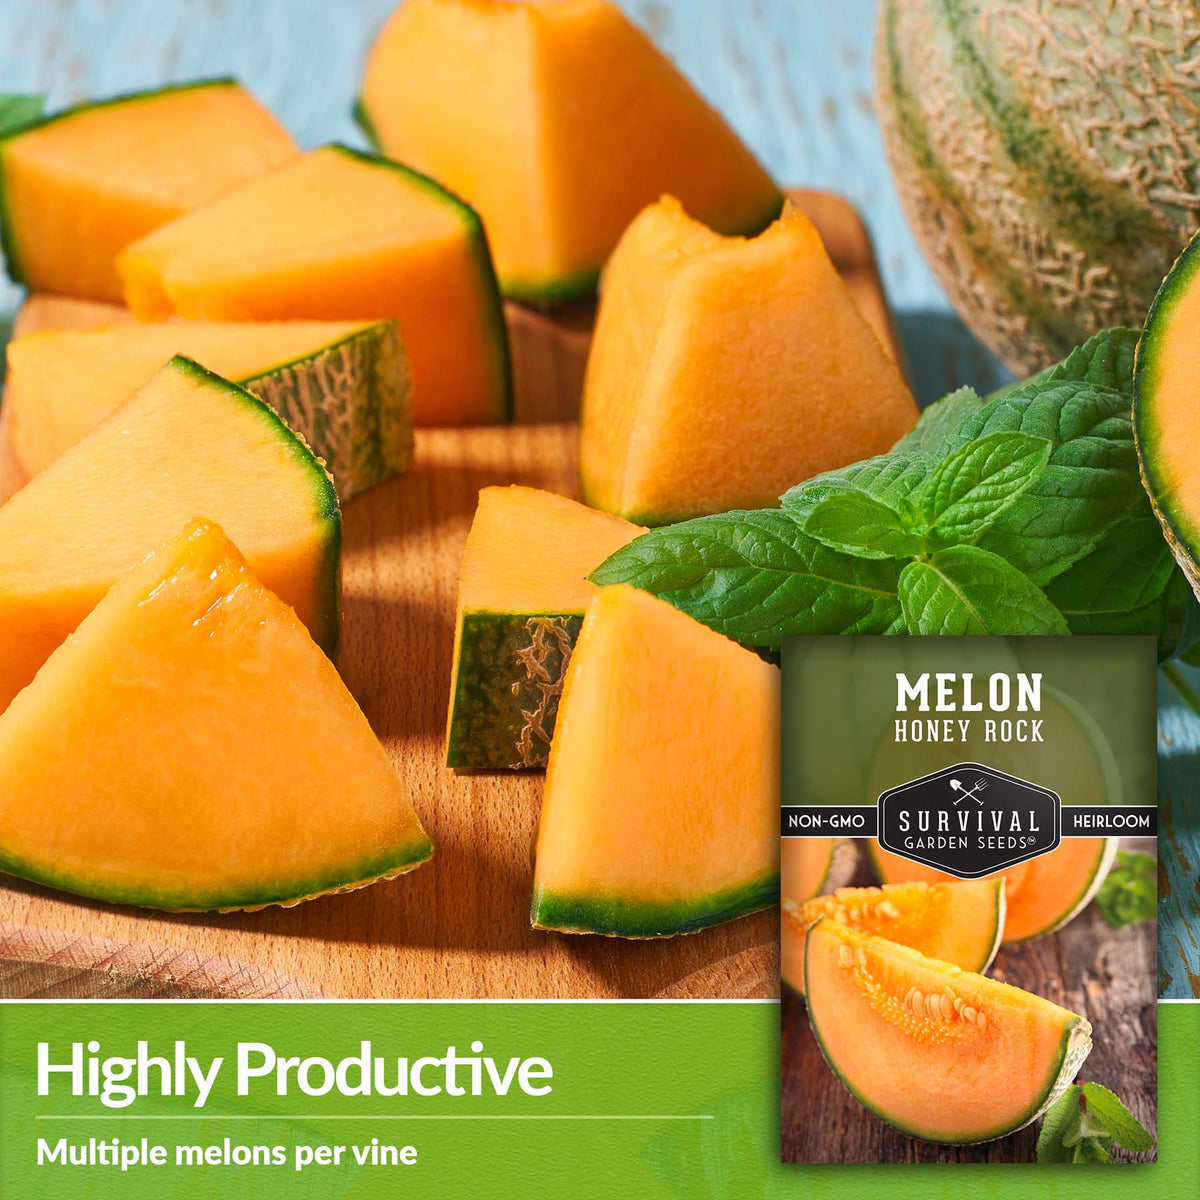 Honey Rock Melons produce multiple melons per vine